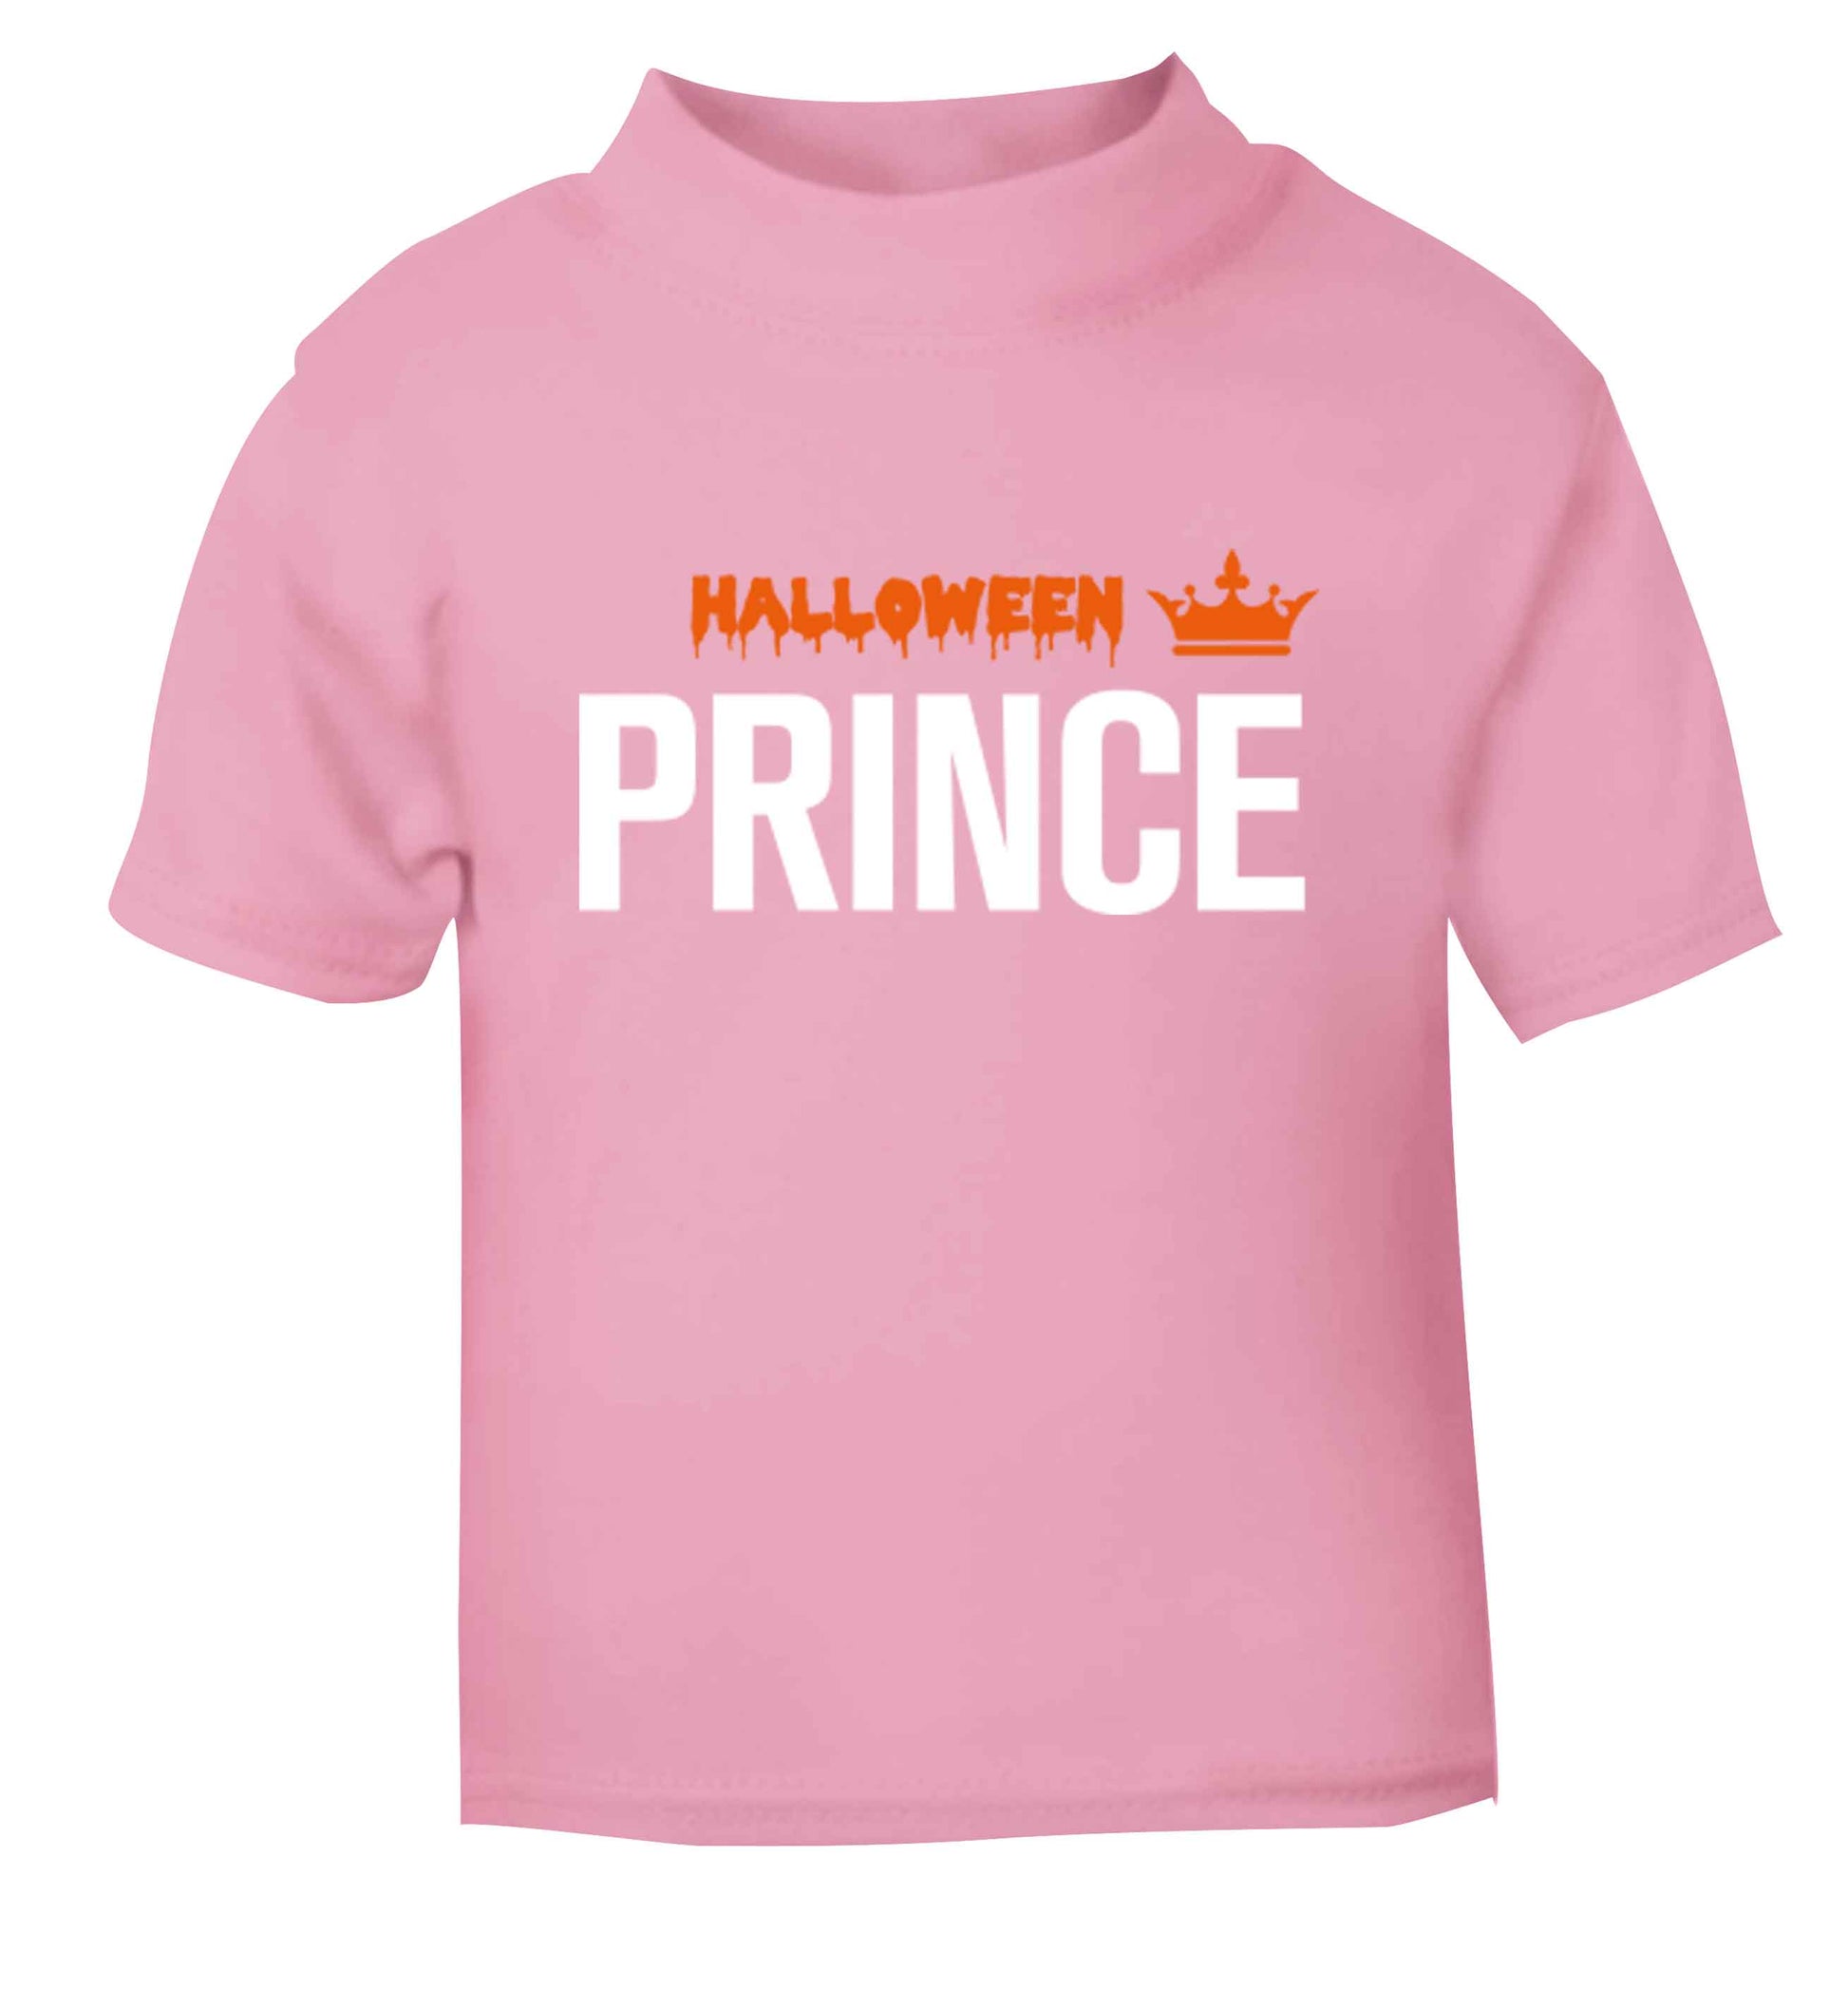 Halloween prince light pink baby toddler Tshirt 2 Years